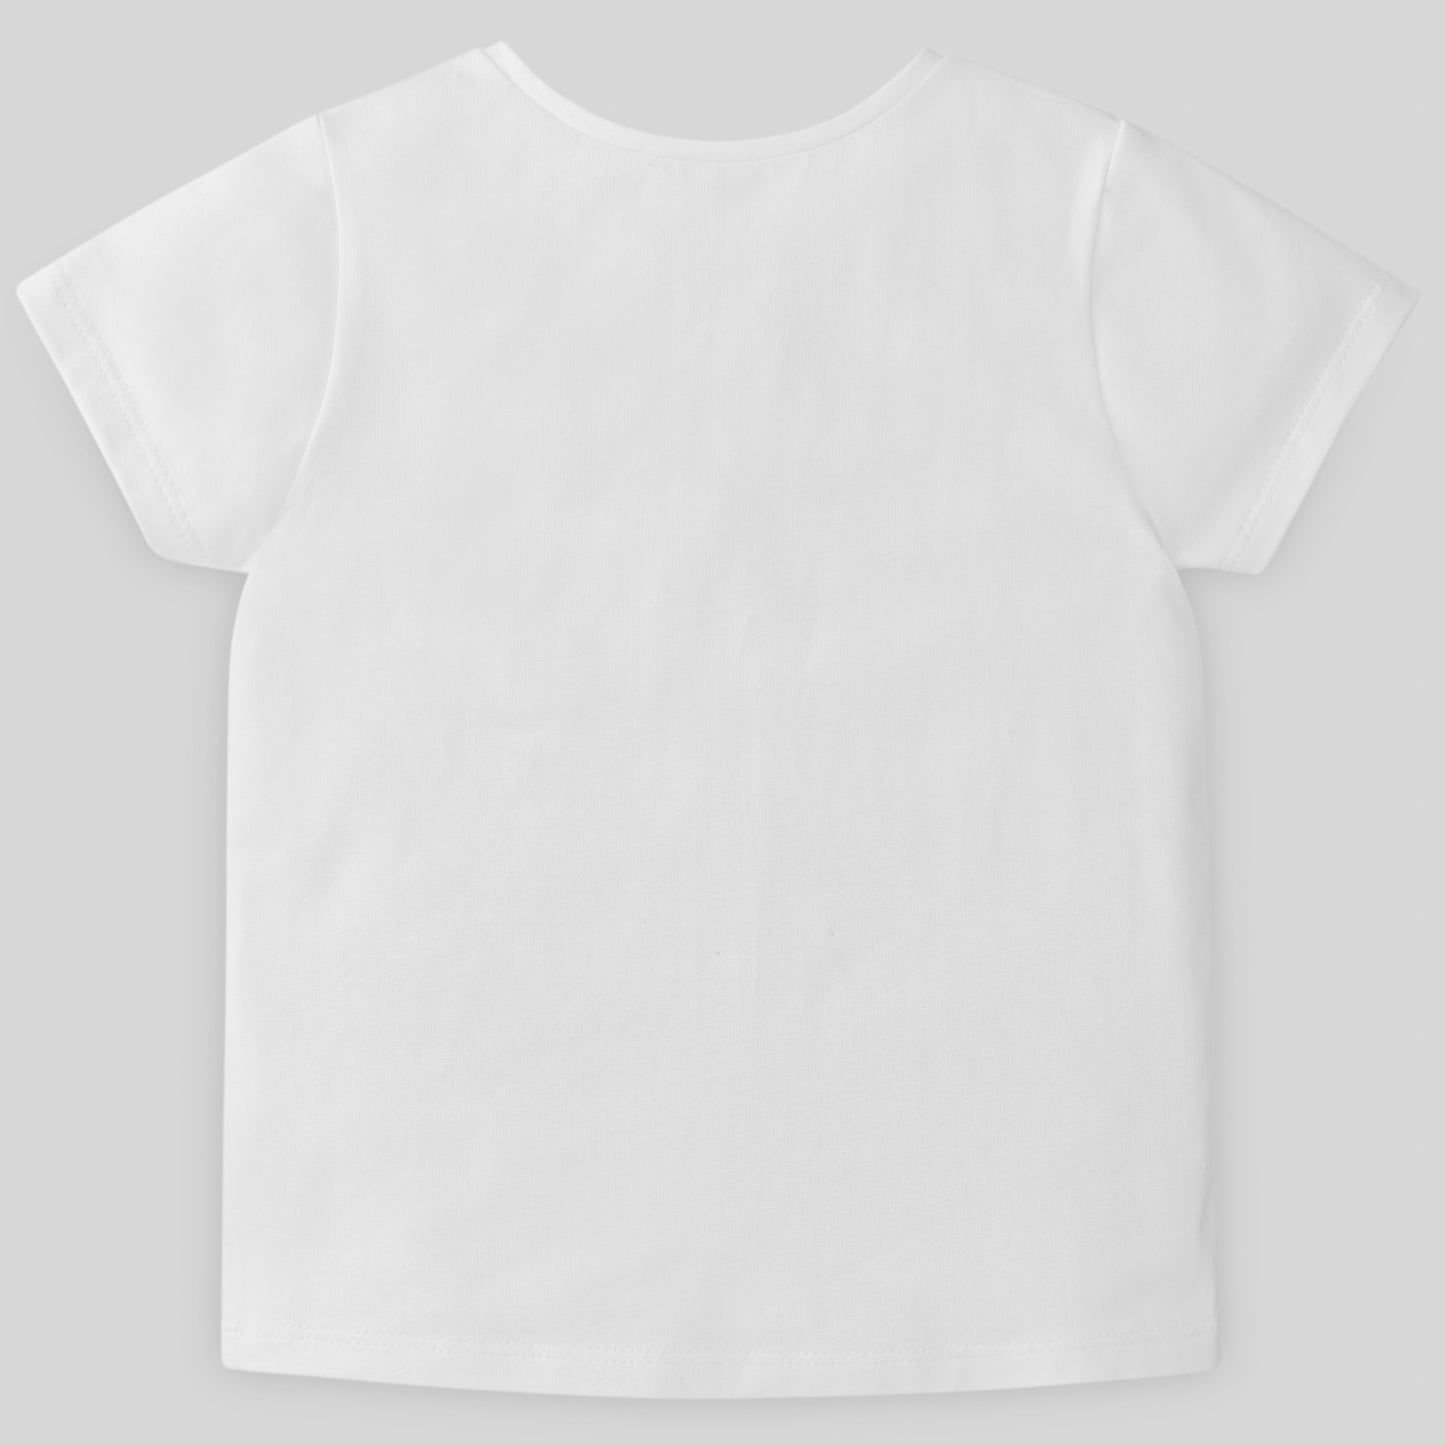 PAZ RODRIGUEZ White t-shirt with blue jellyfish print